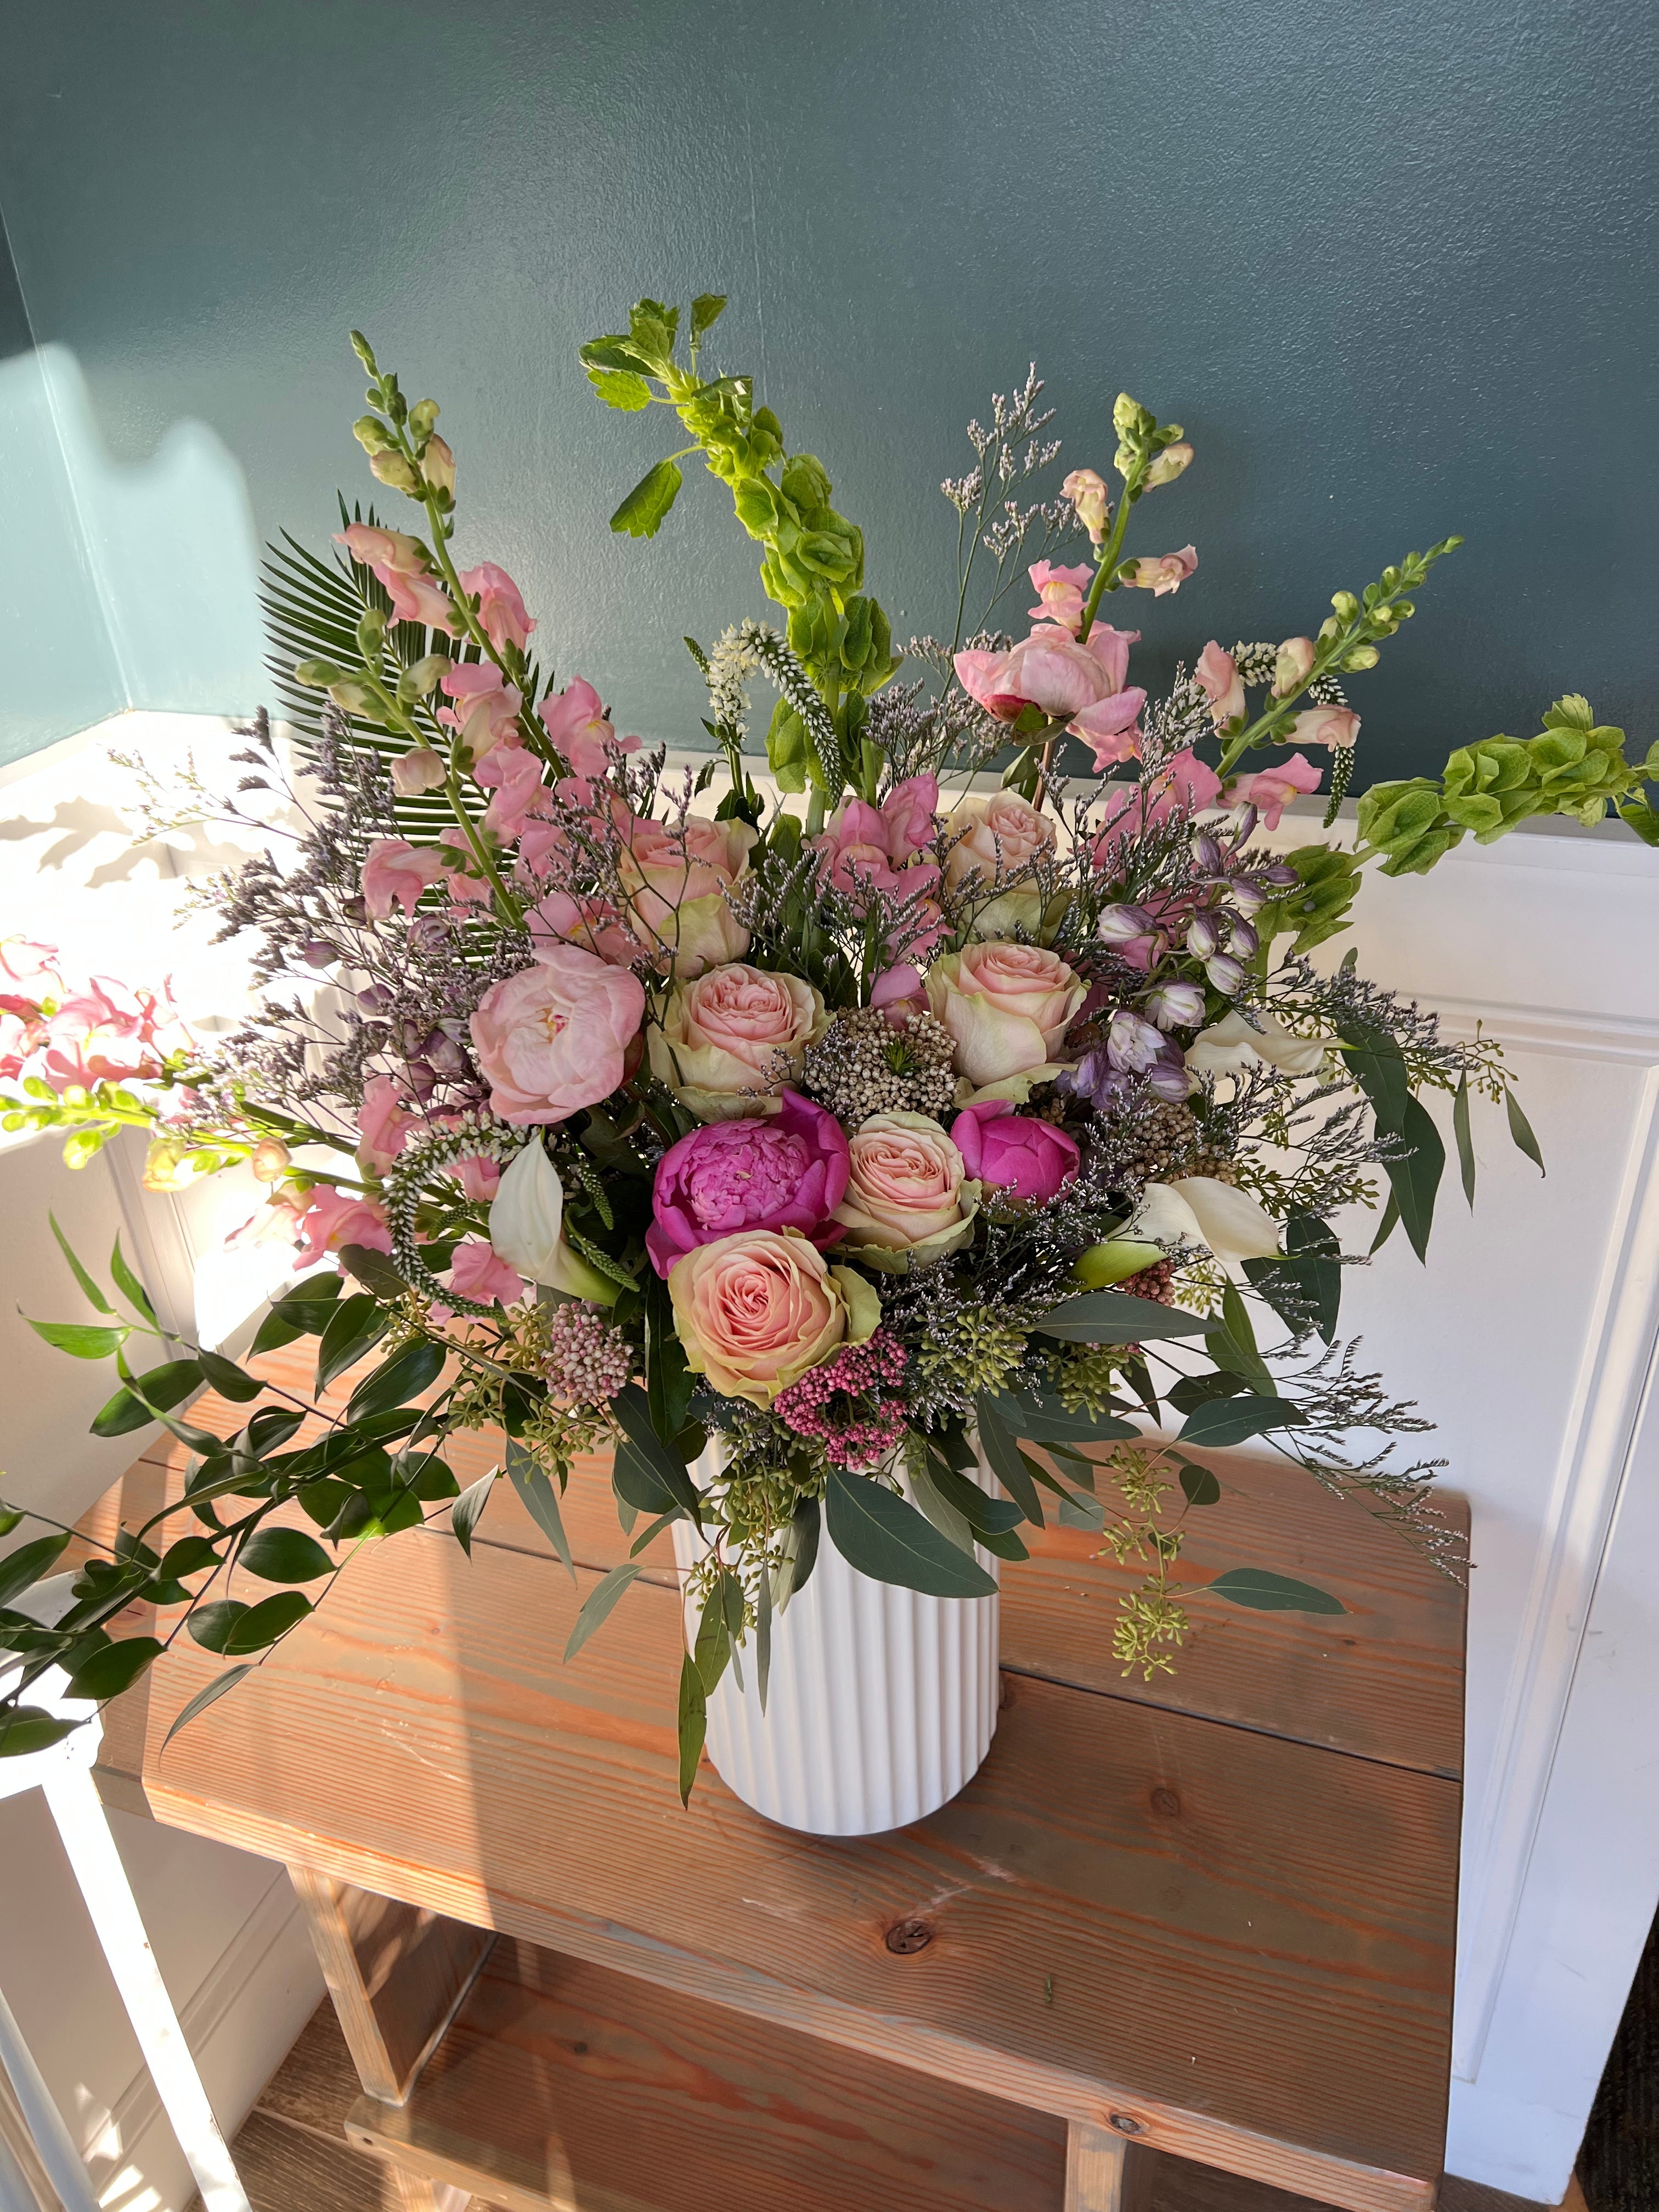 Mother's Day Arrangement in Vase: Supreme